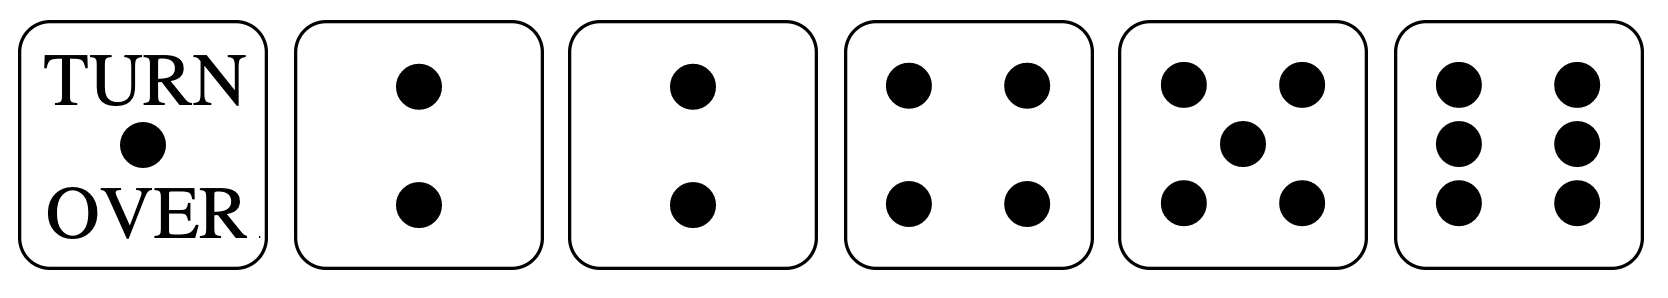 6 dice graphics